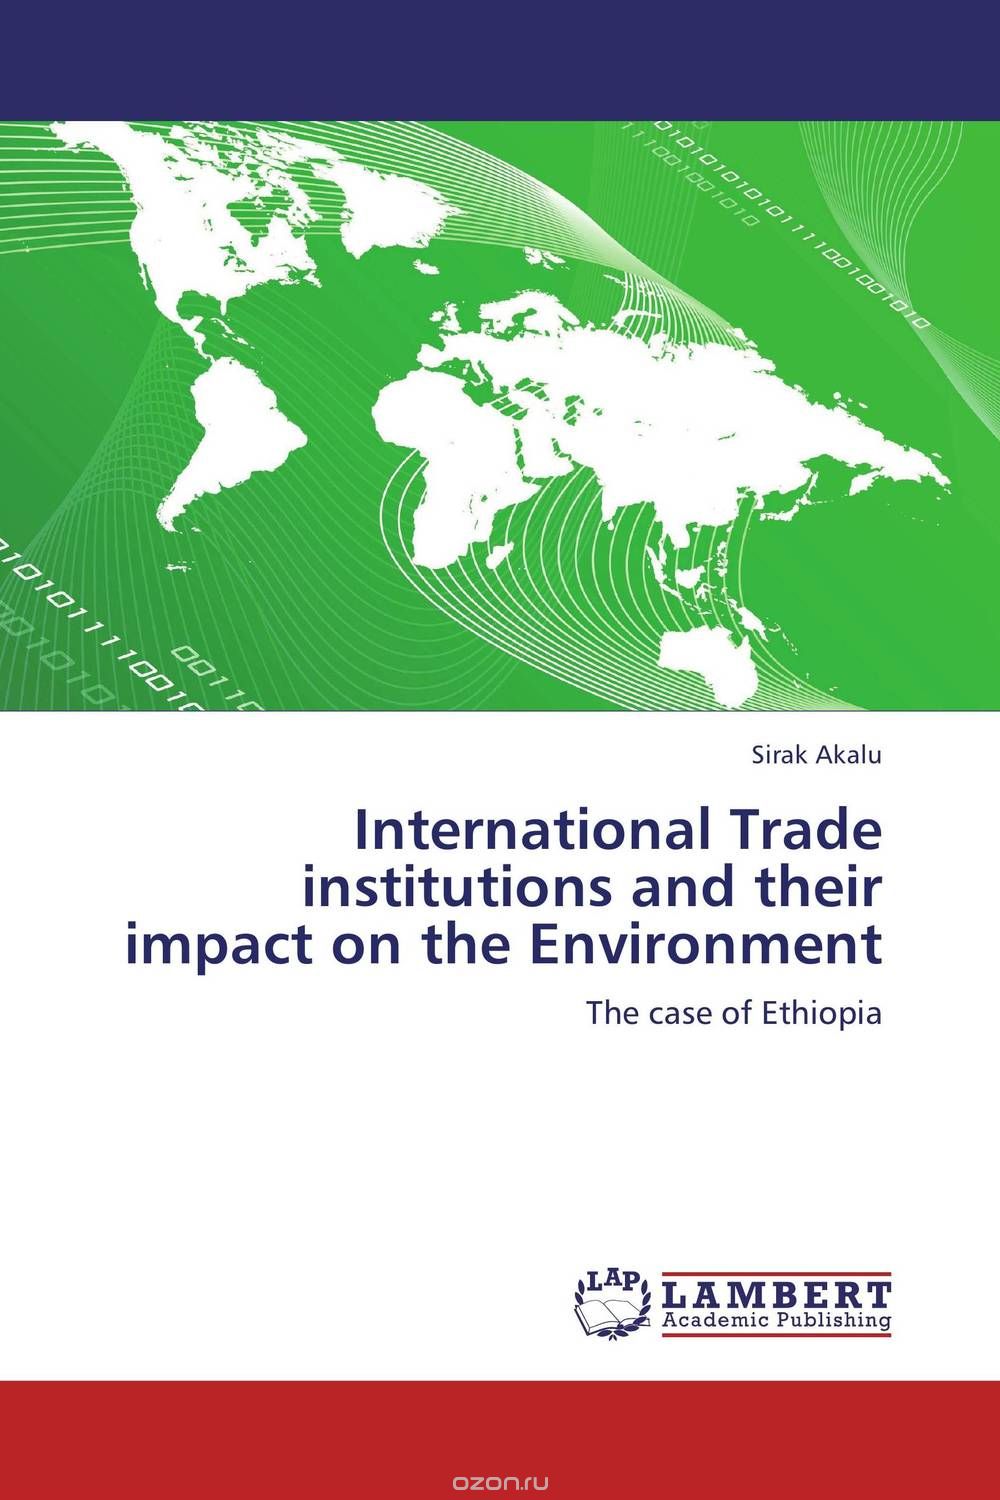 Скачать книгу "International Trade institutions and their impact on the Environment"